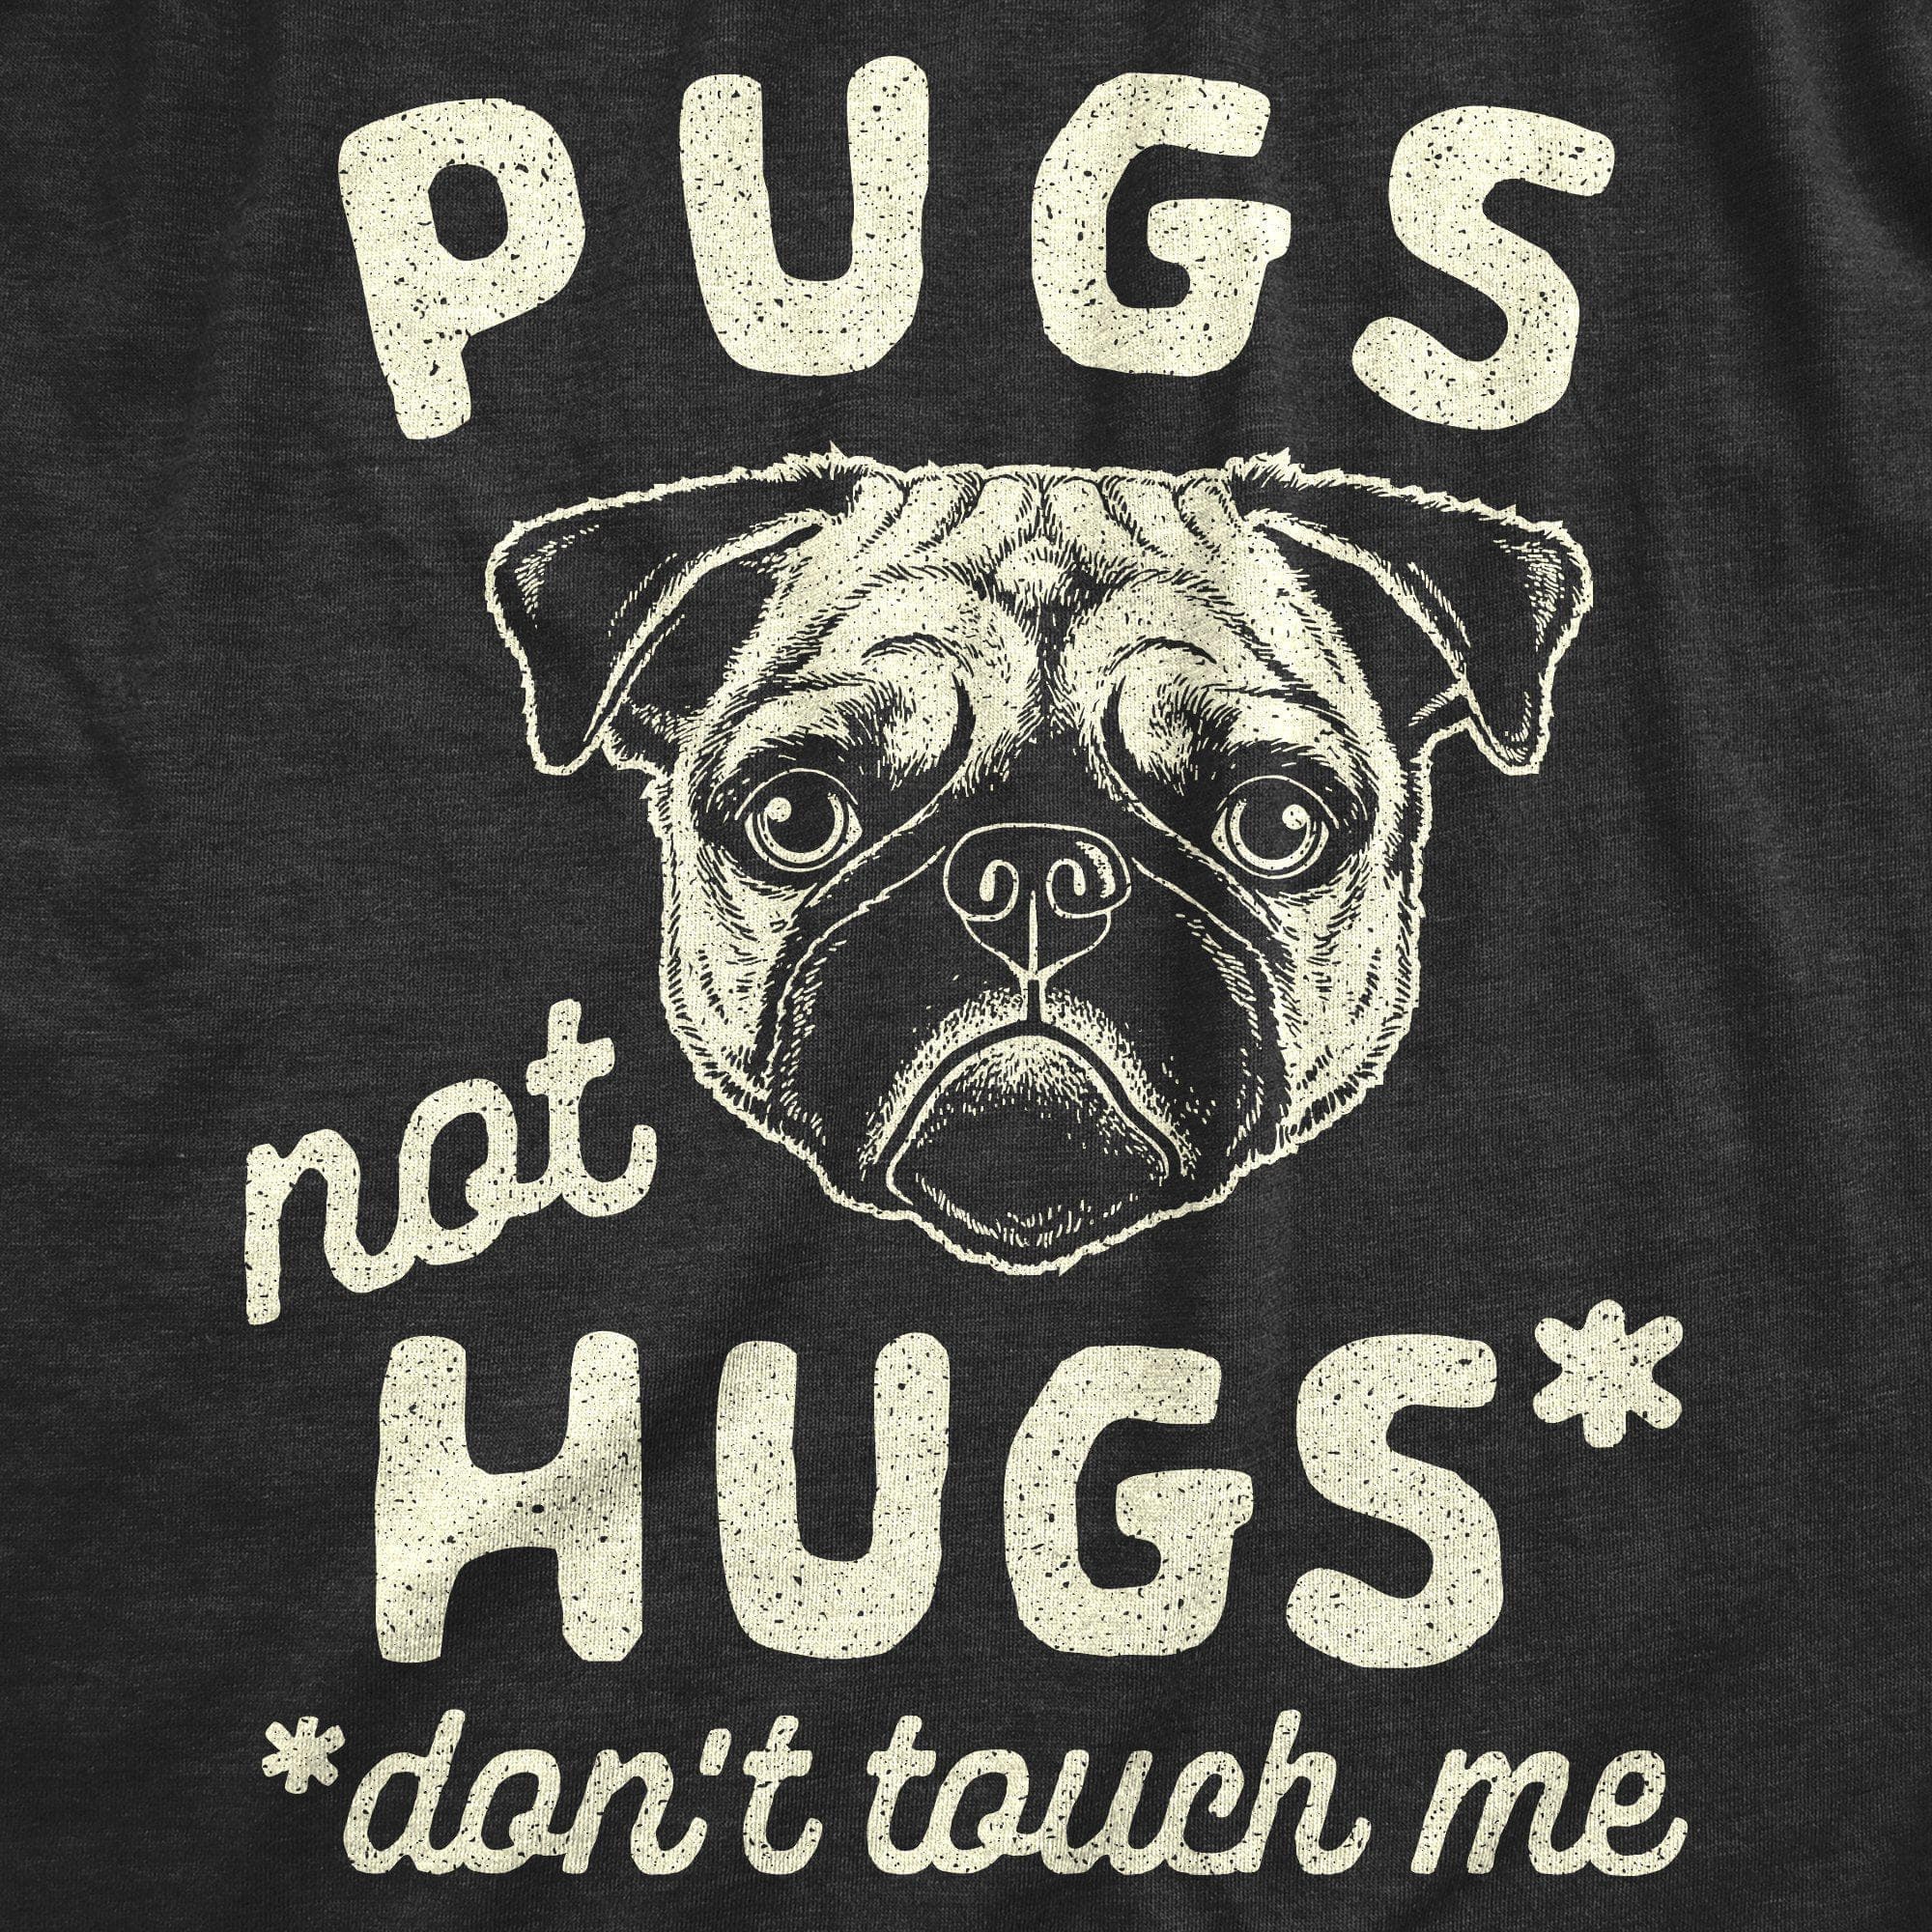 Pugs Not Hugs Coronavirus Men's Tshirt - Crazy Dog T-Shirts